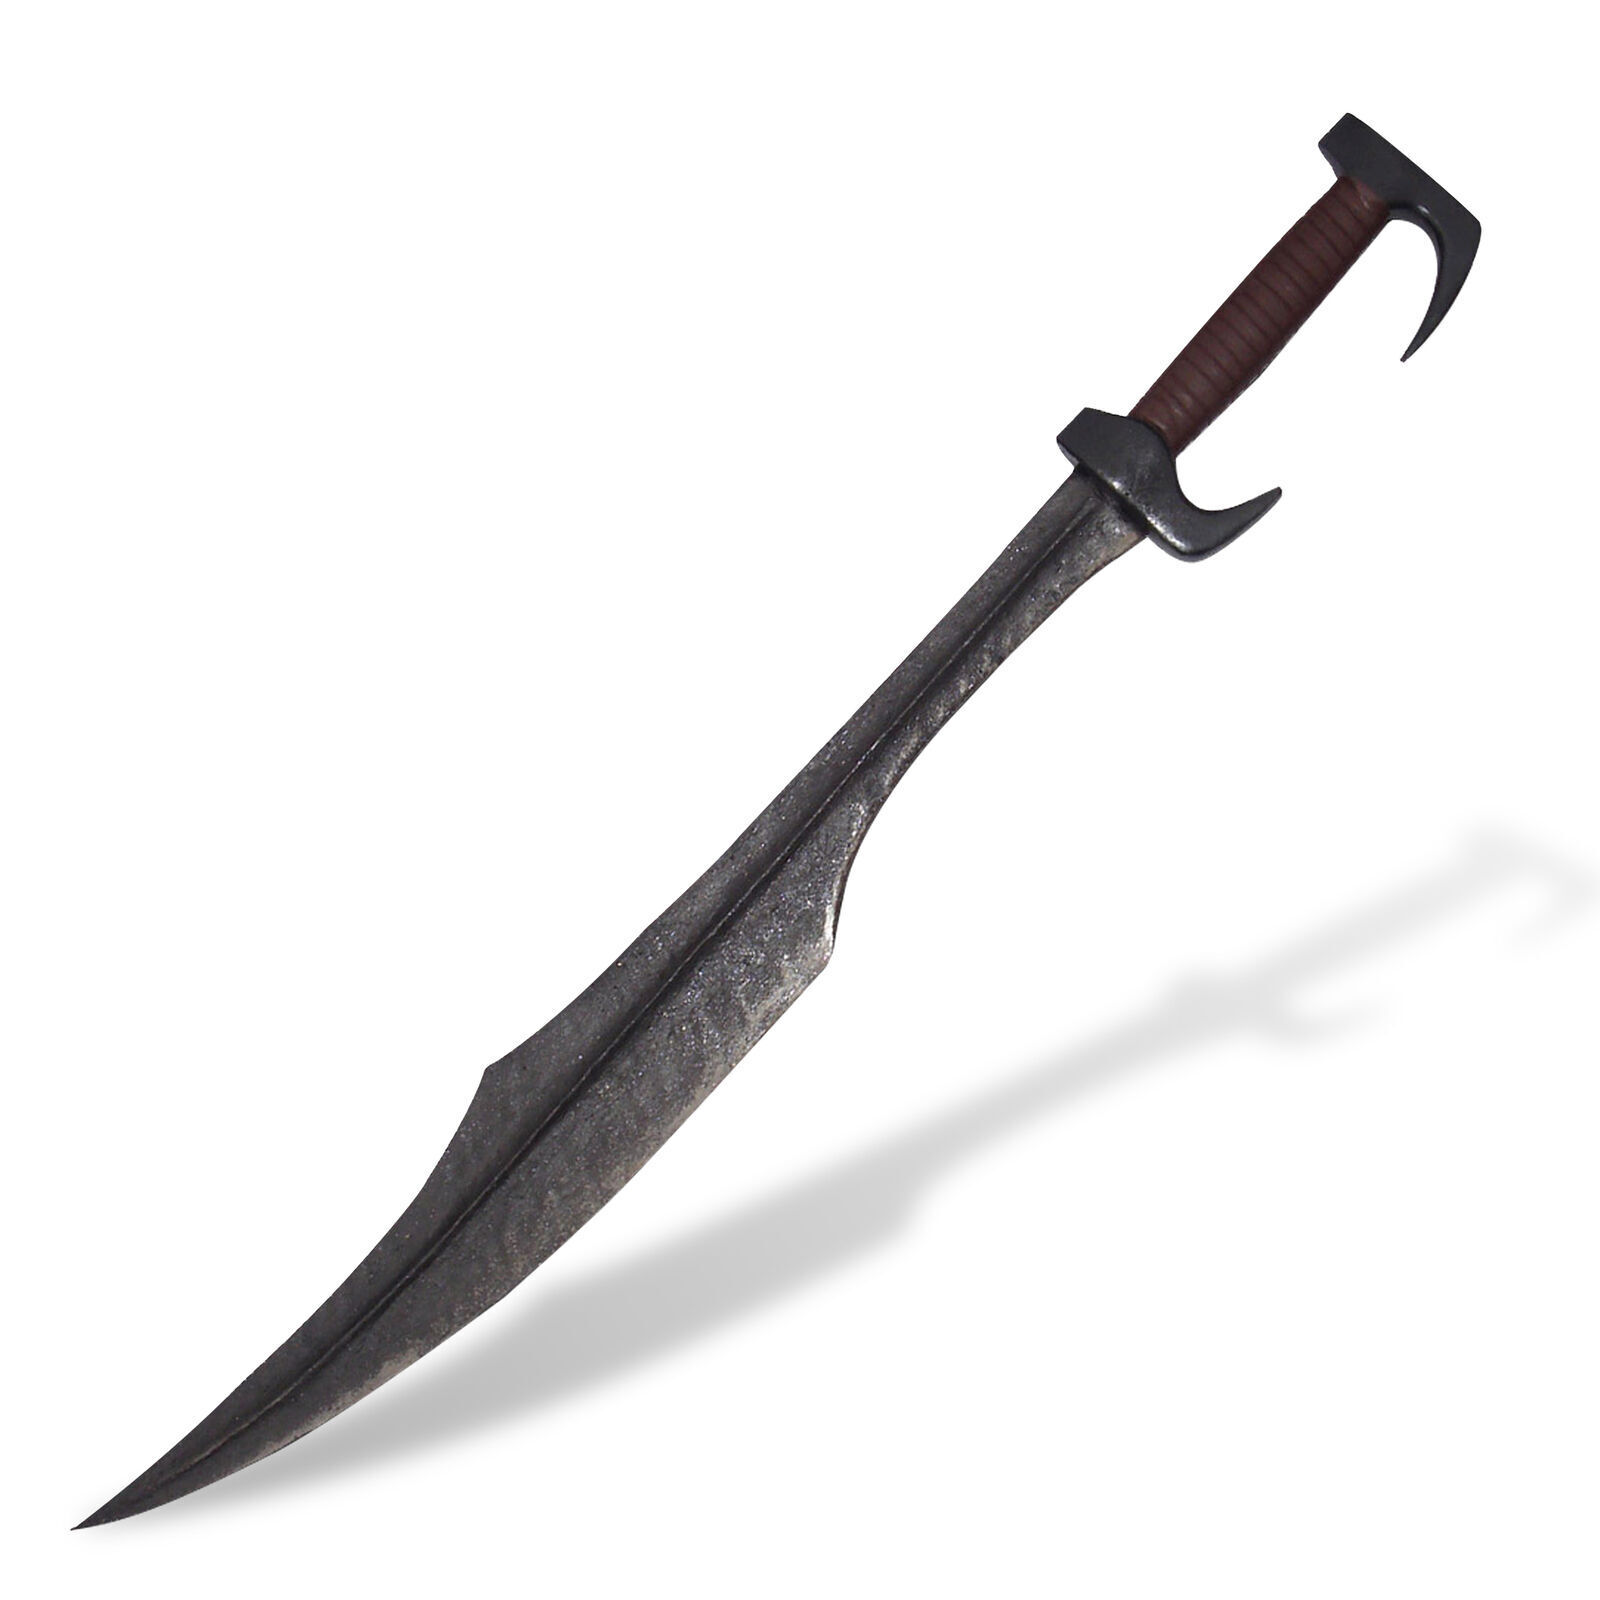 300 Spartan Warrior Greek Historical High Carbon Steel Movie Medieval Sword